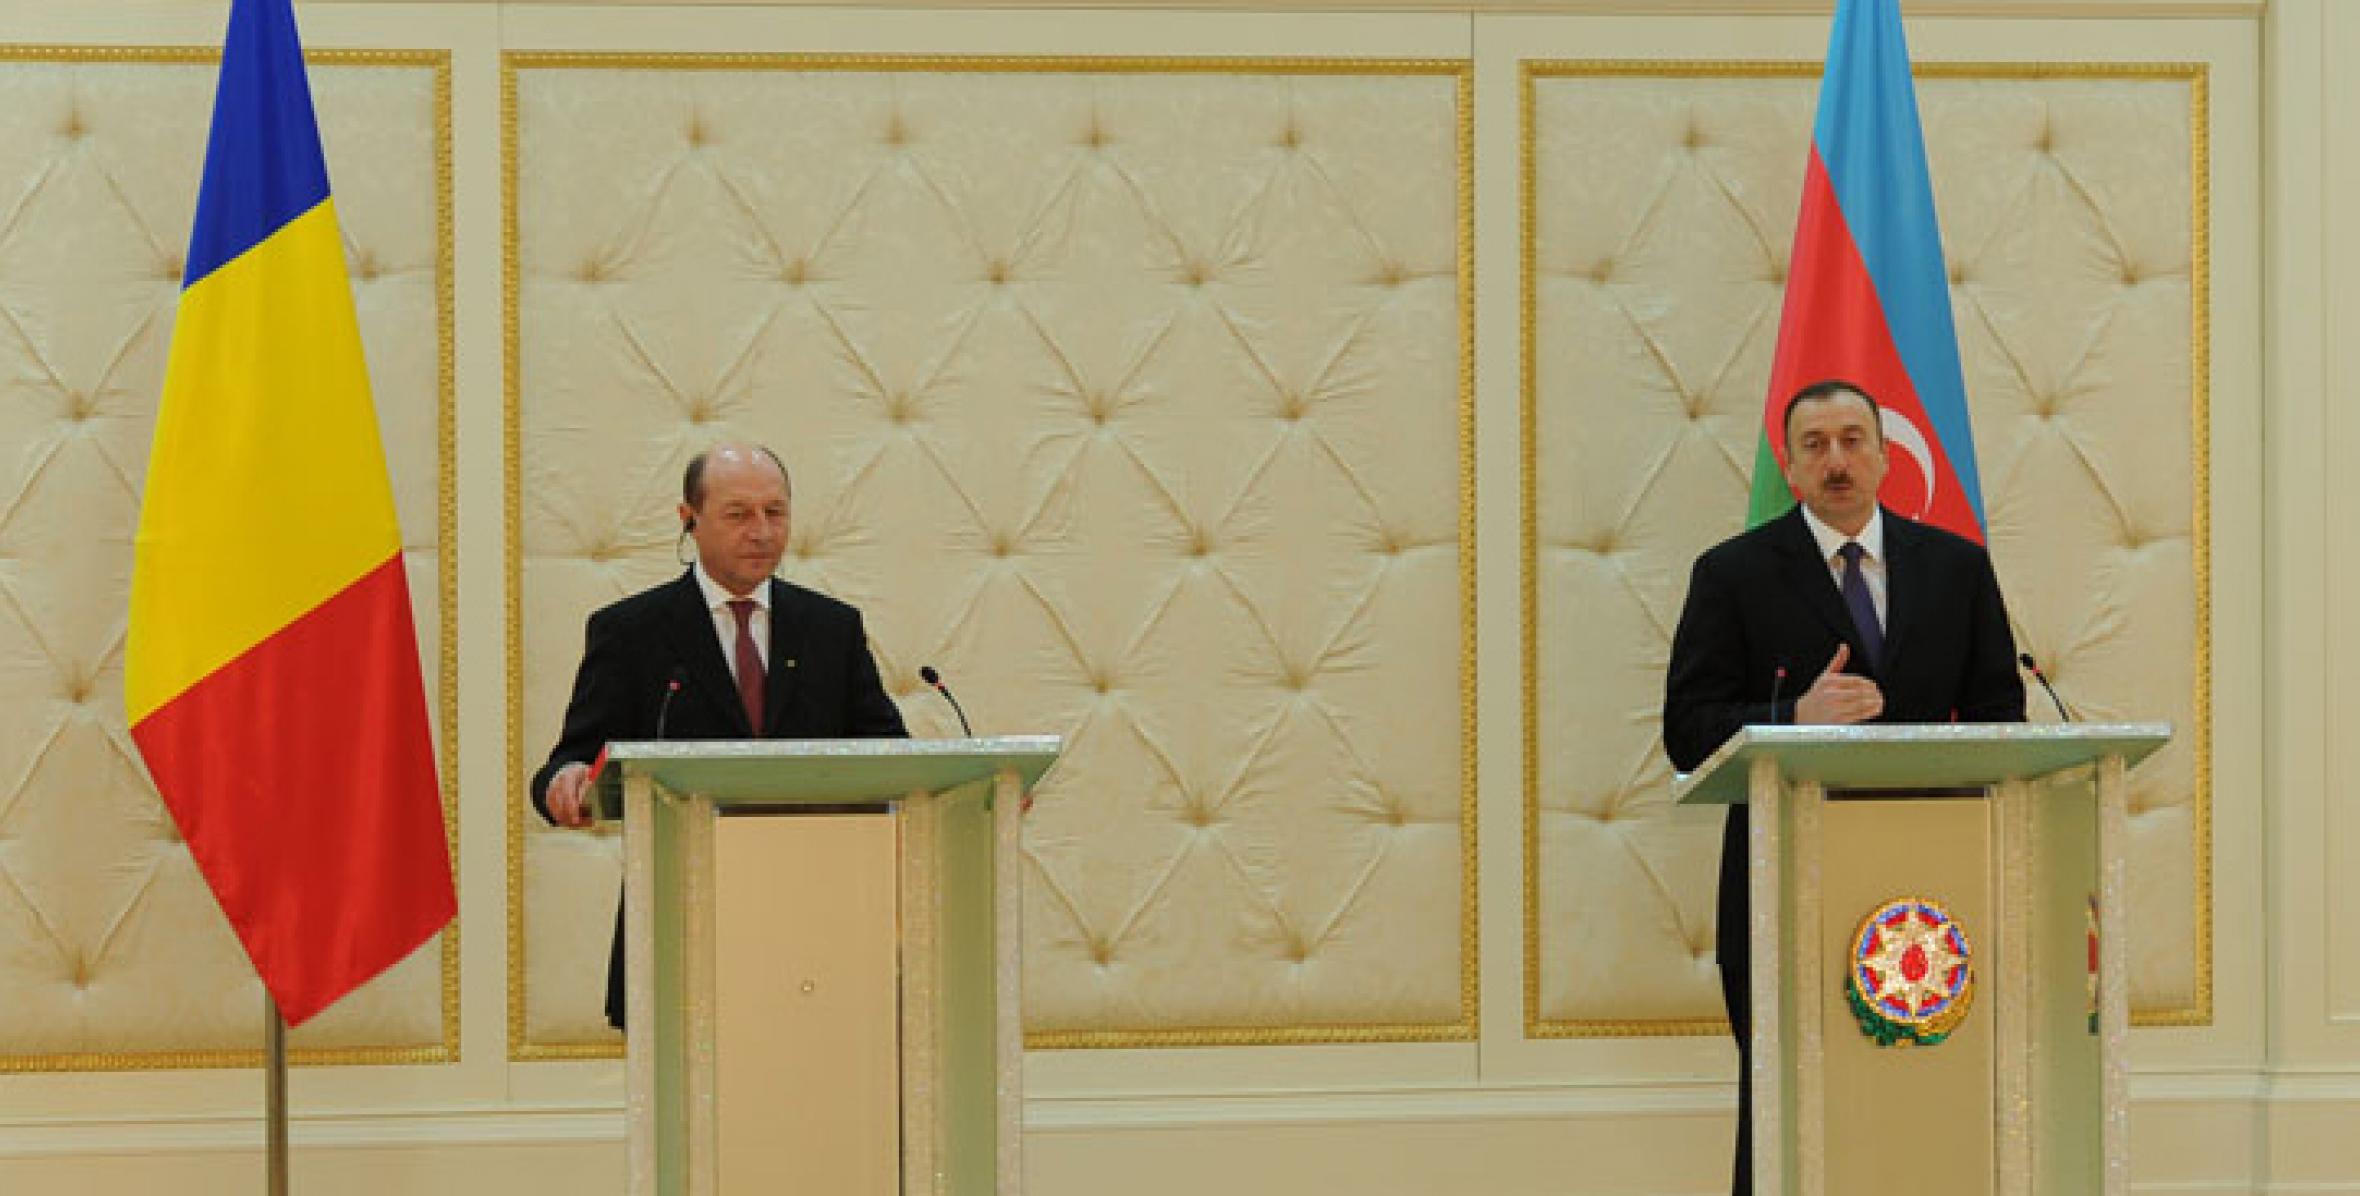 Azerbaijan and Romanian Presidents made press statements